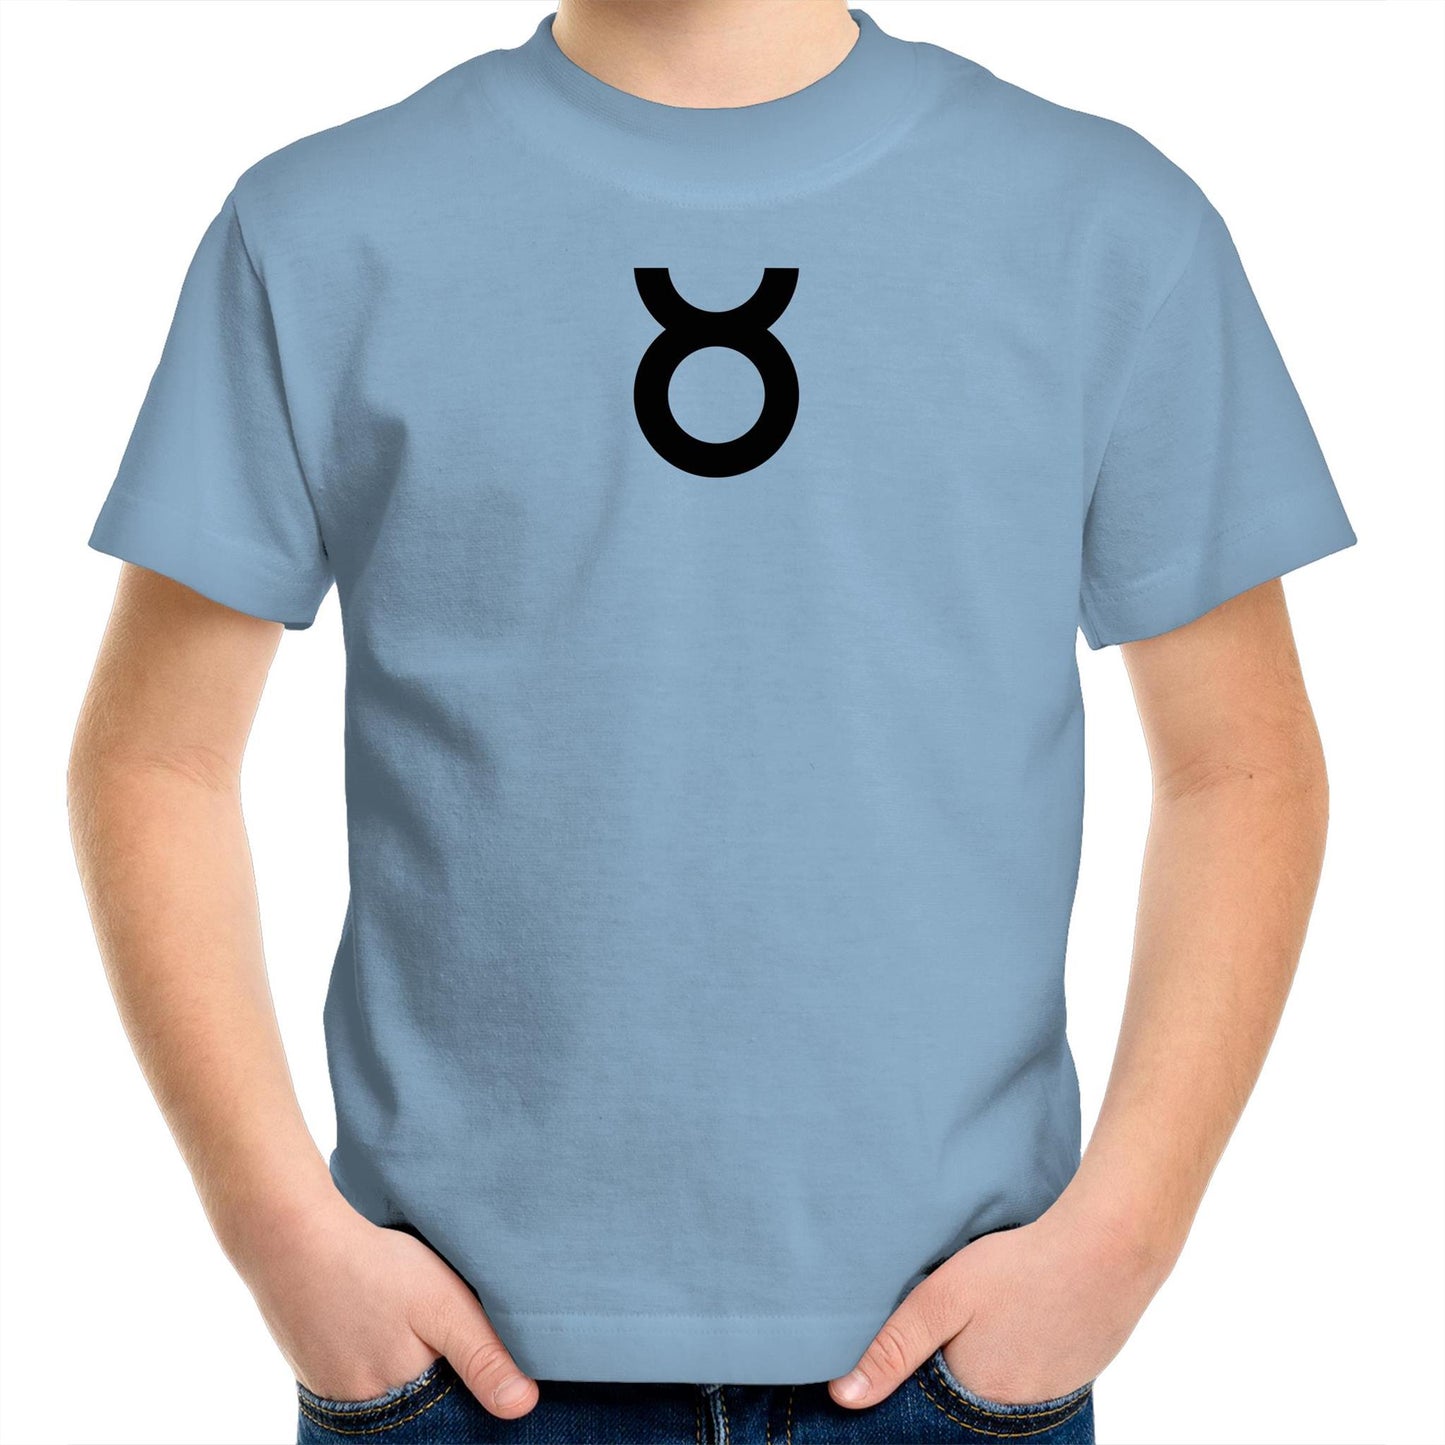 Taurus T Shirts for Kids